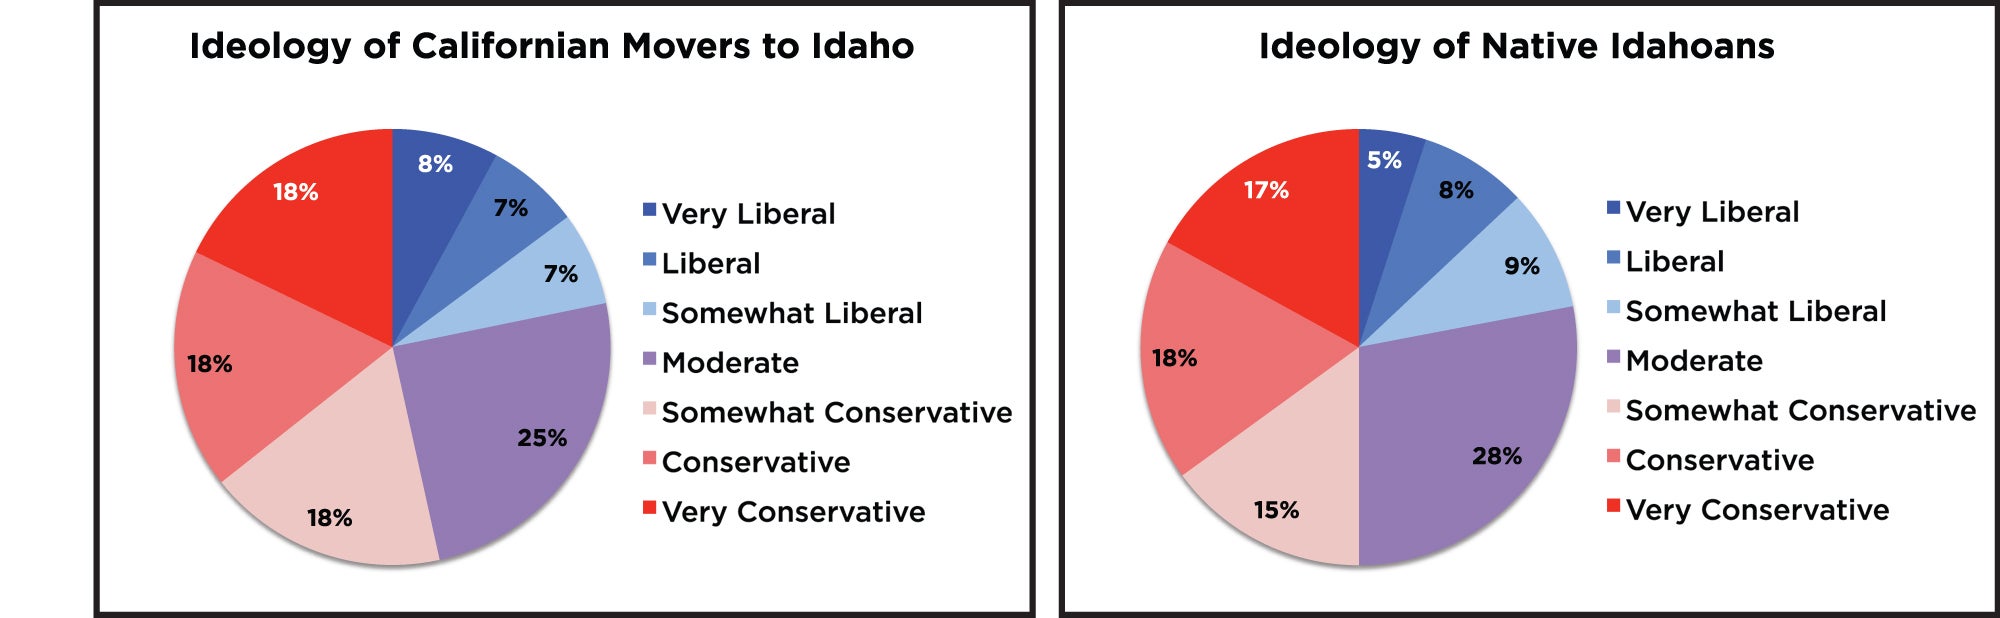 Ideology of Californian Movers vs Native Idahoans, pie chart